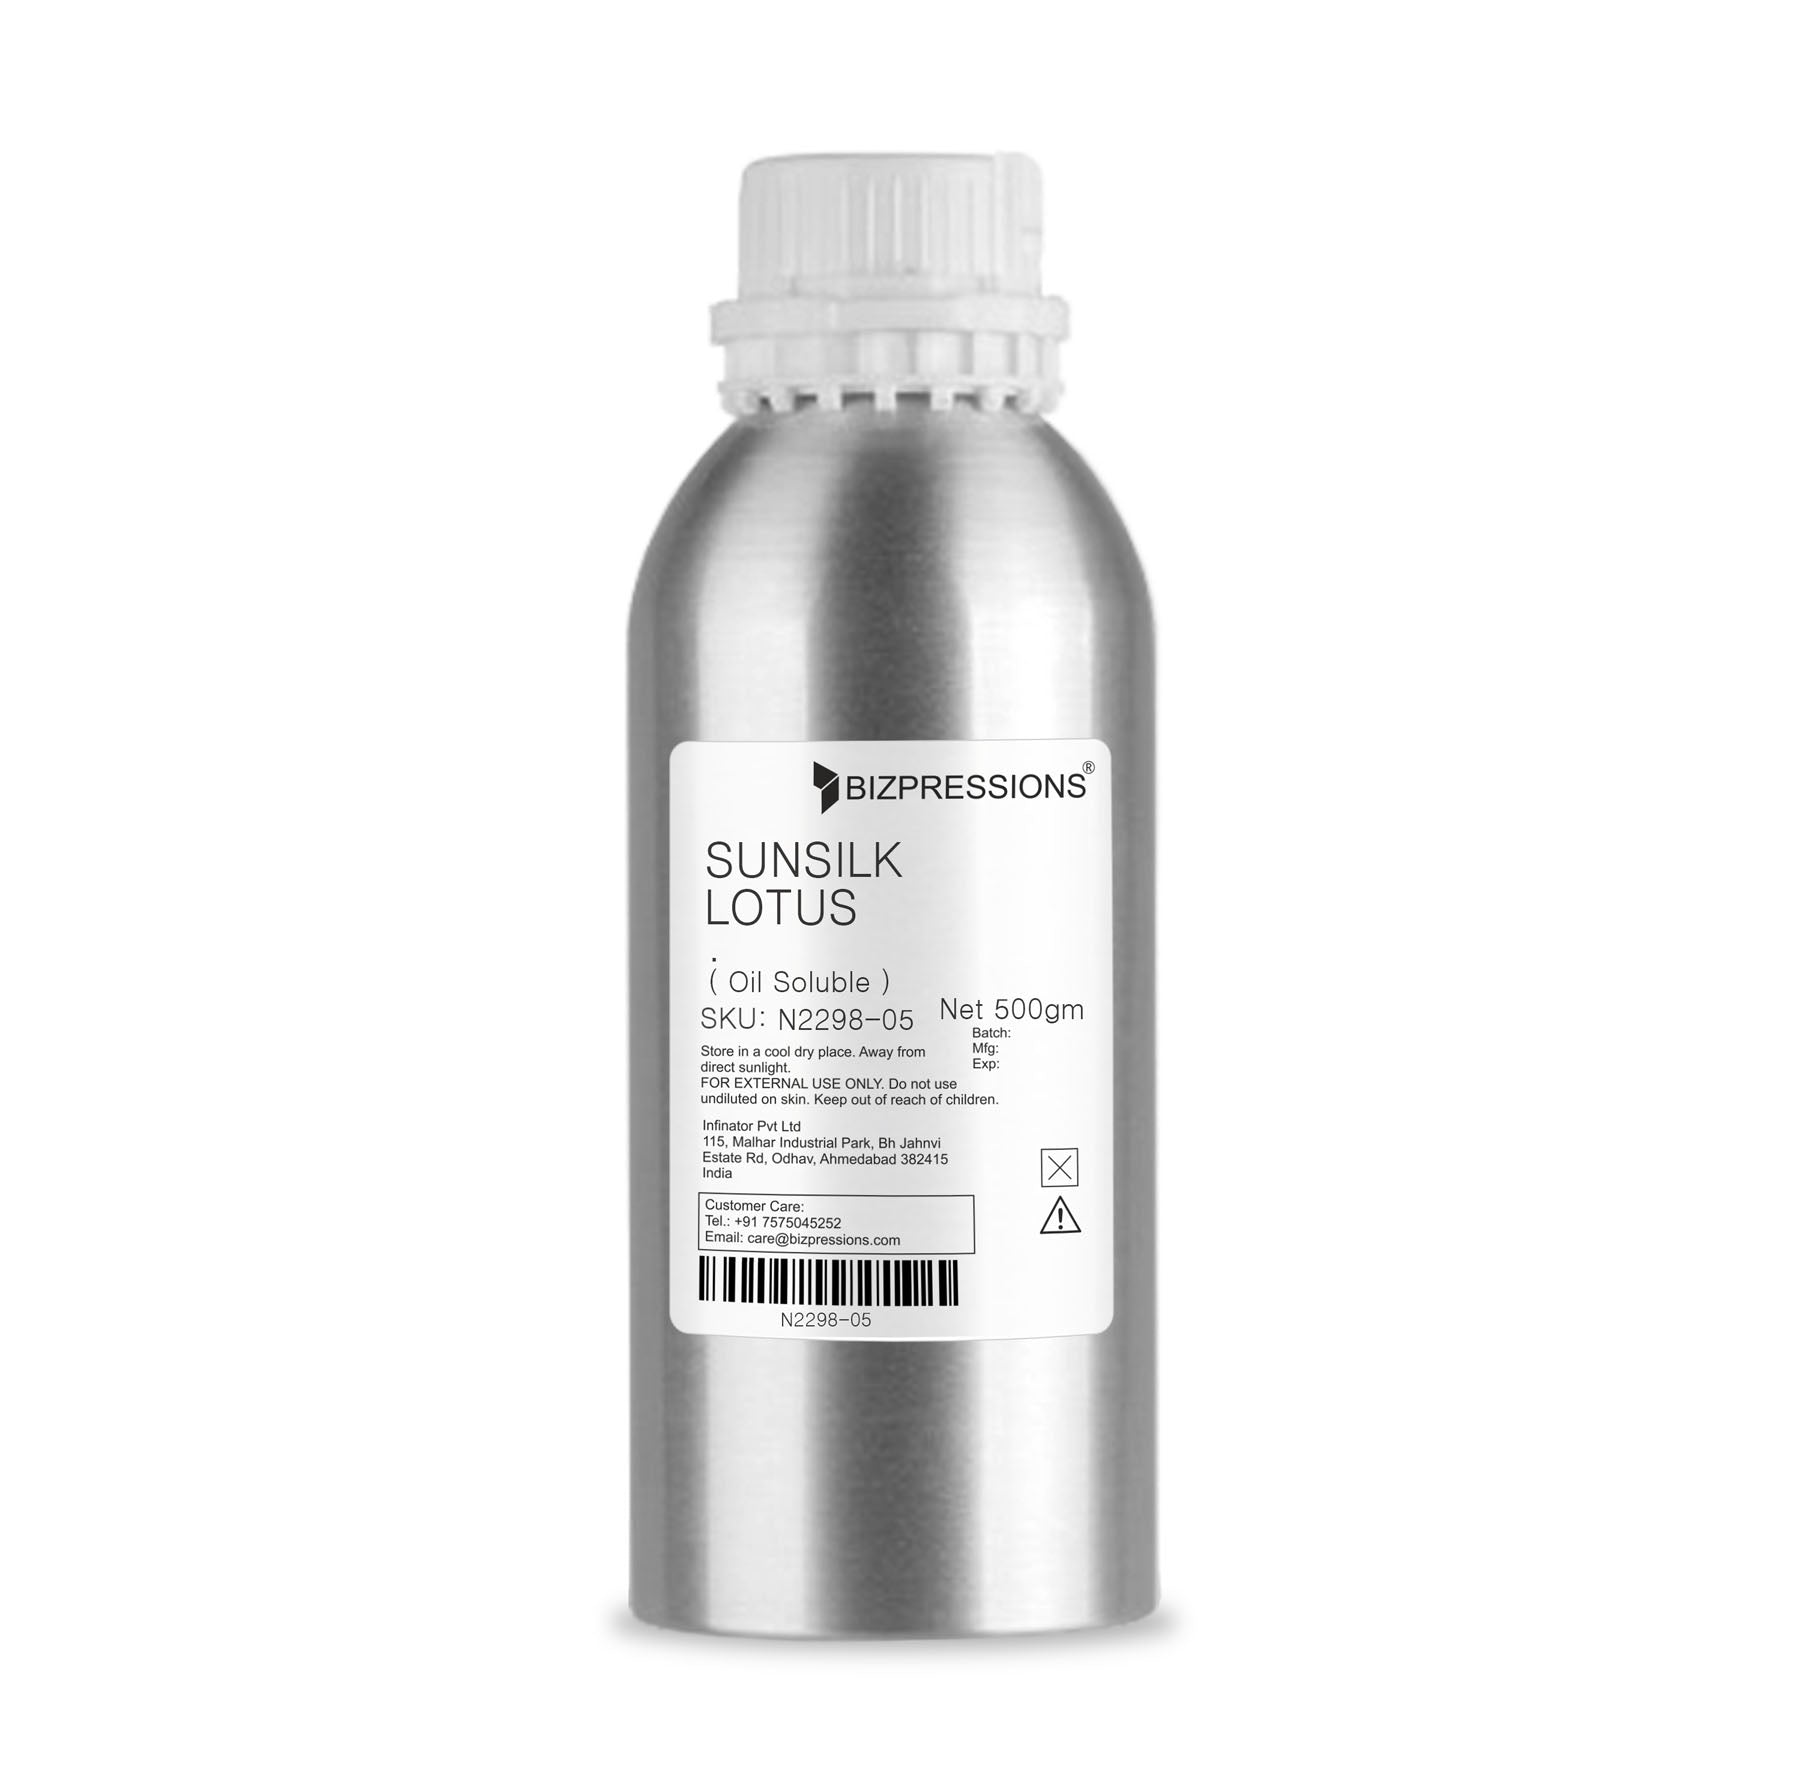 SUNSILK LOTUS - Fragrance ( Oil Soluble ) - 500 gm